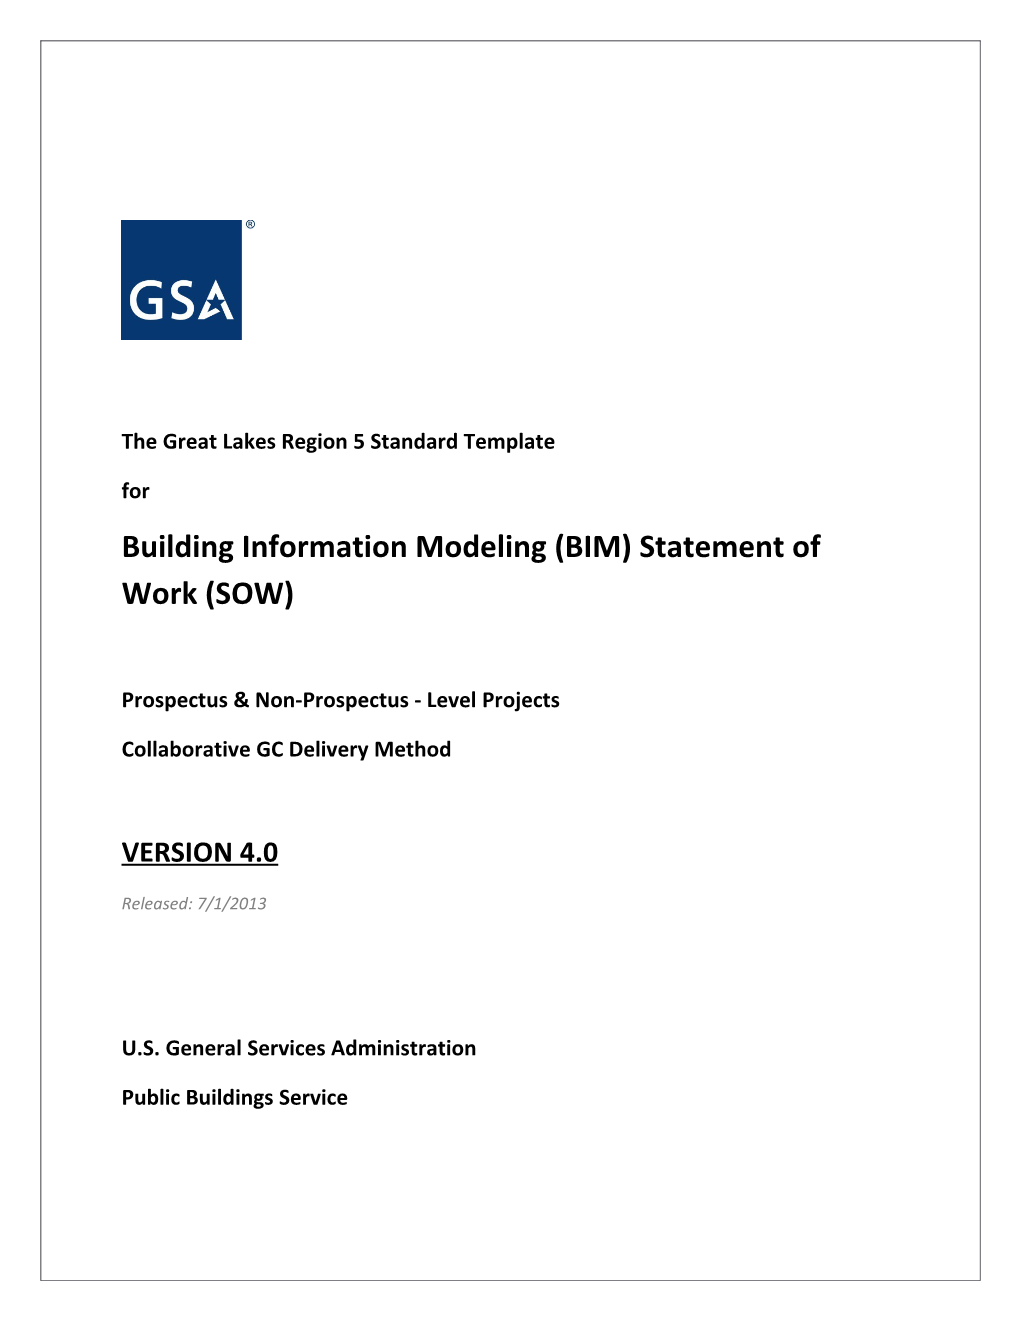 Building Information Modeling (BIM) Statement of Work (SOW)